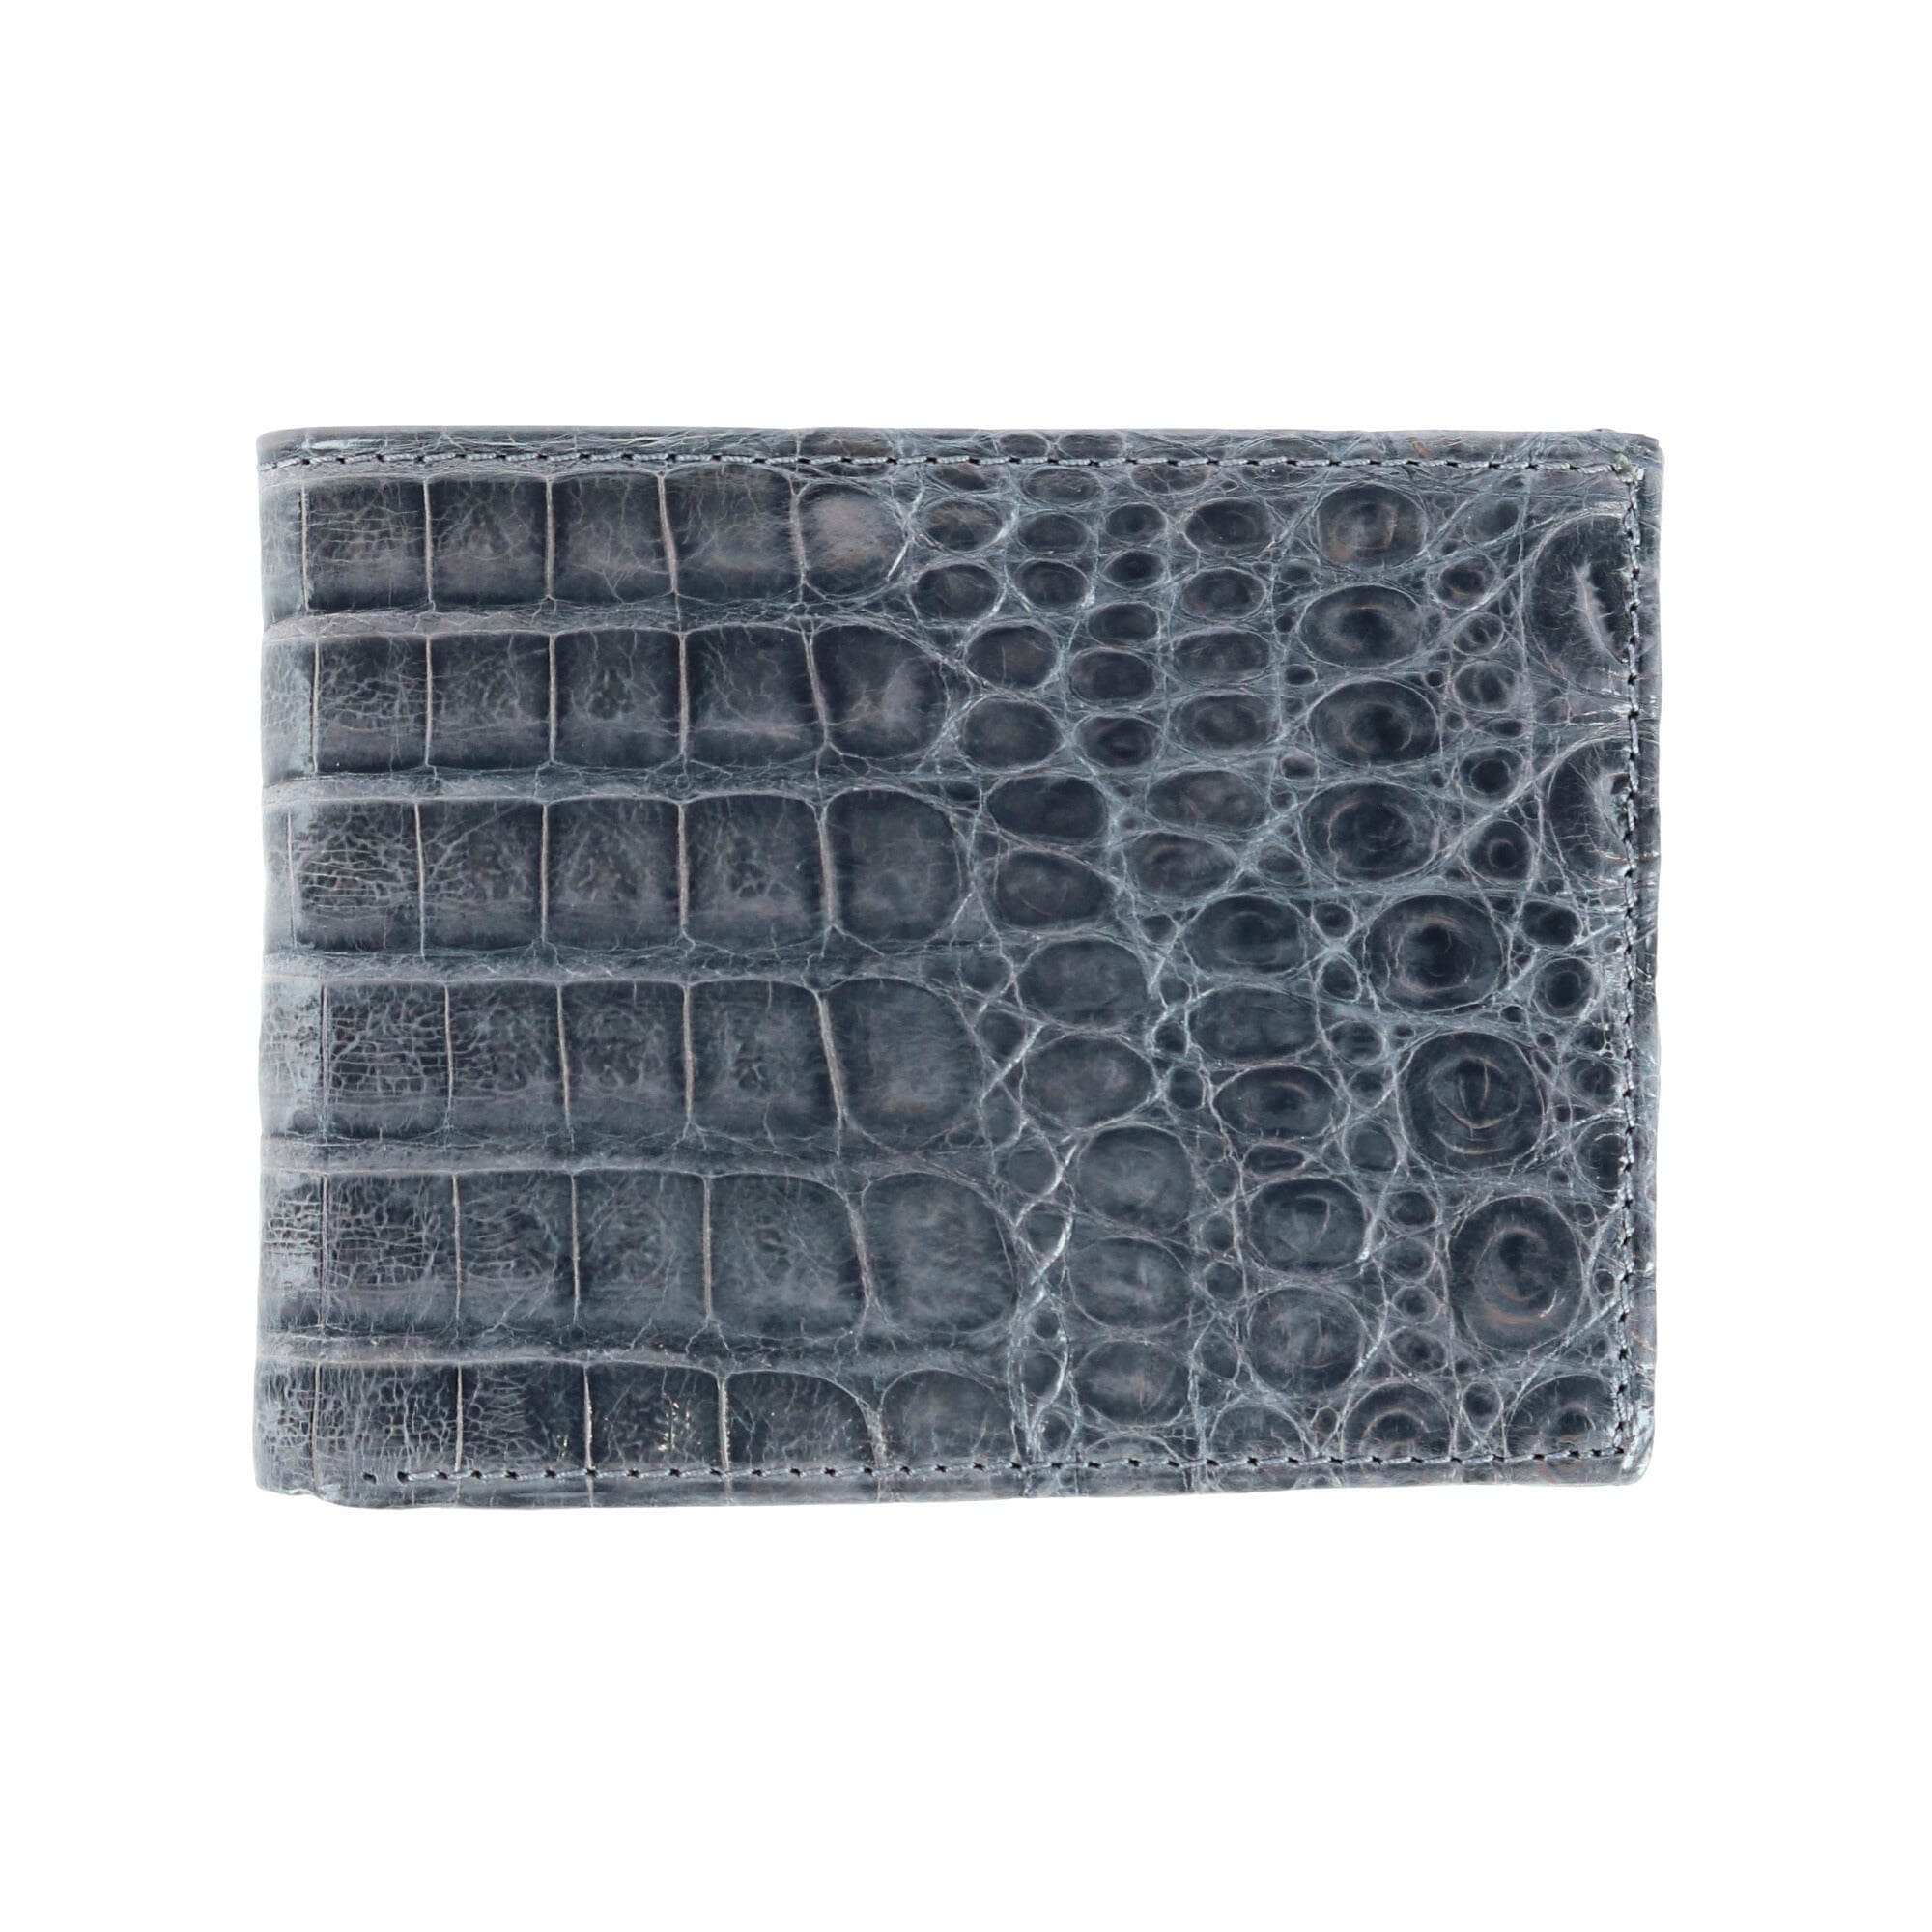 Fastrack Sky Blue Sleek Casual Button Wallet For Women – SaumyasStore